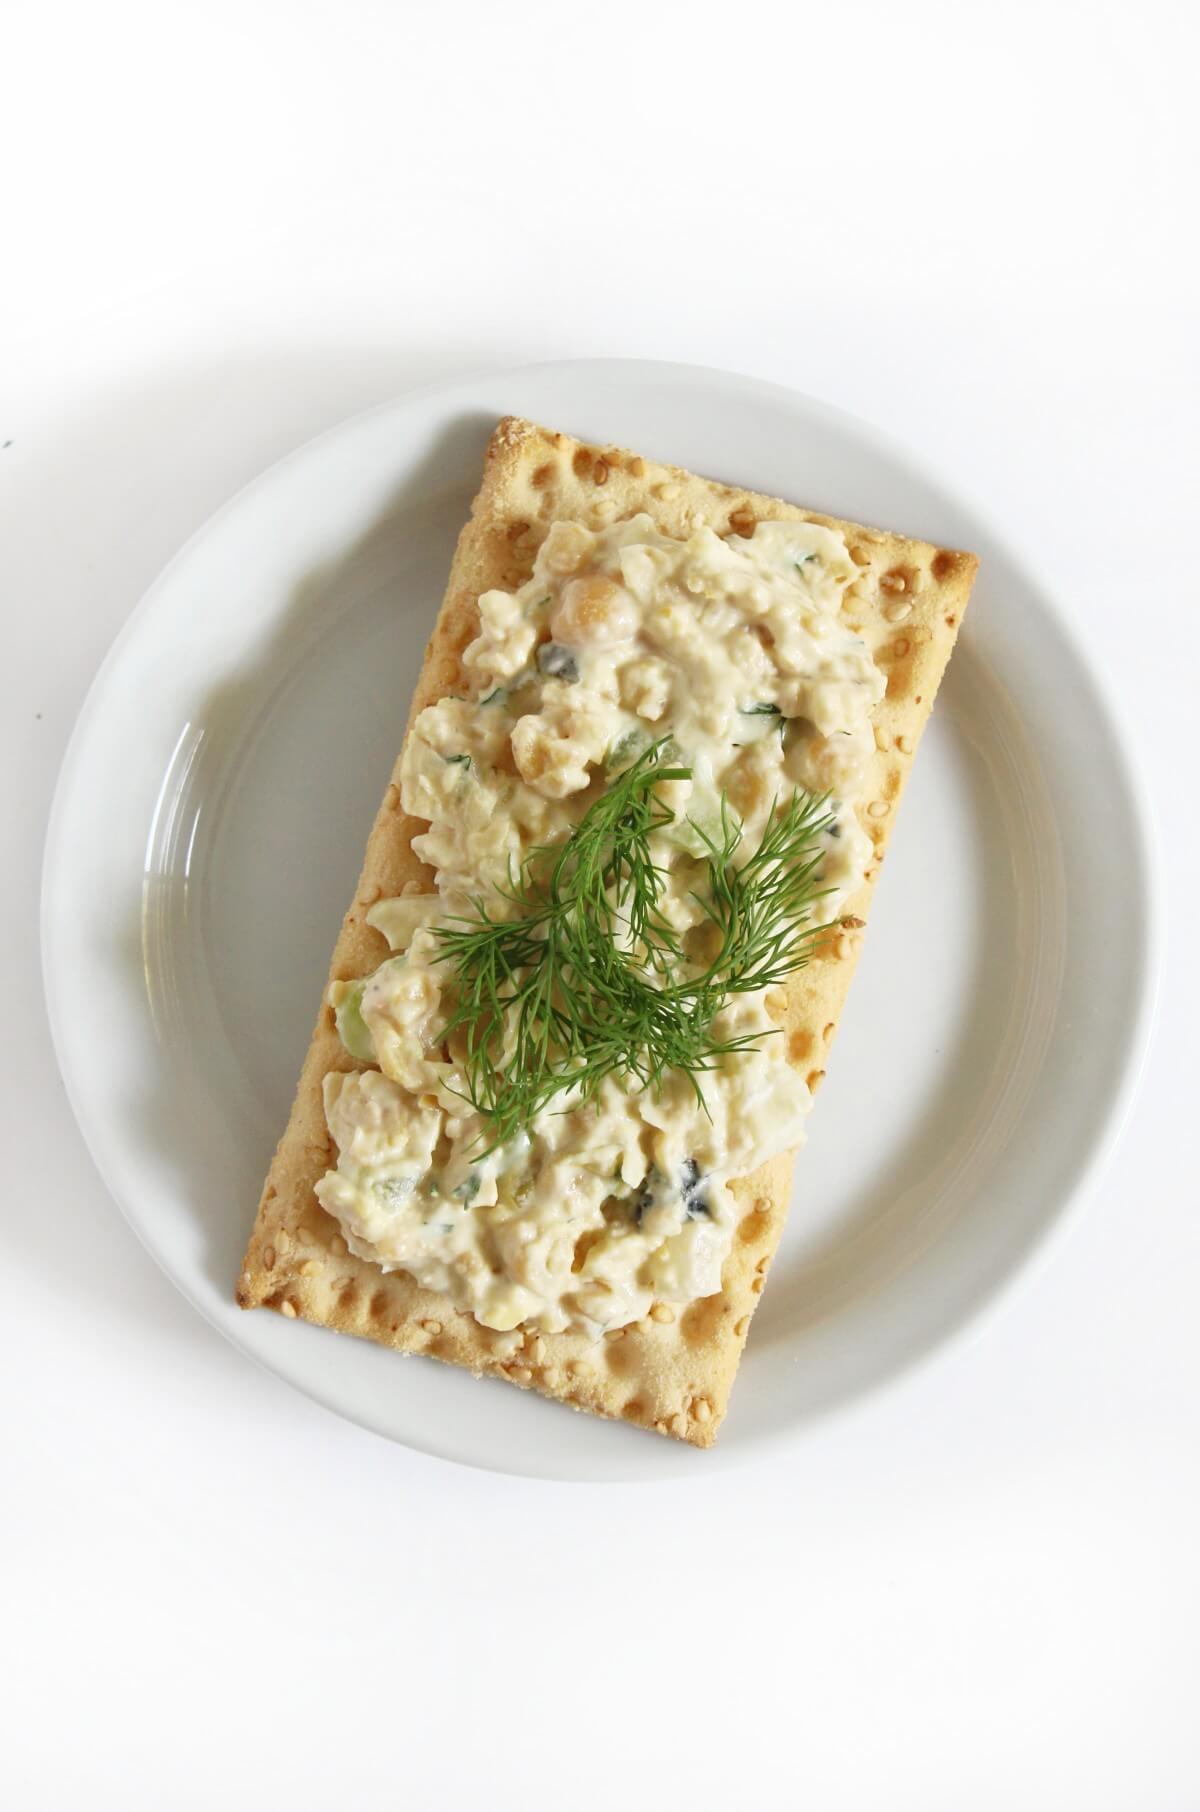 gluten-free cracker with vegan tuna salad and fresh dill.